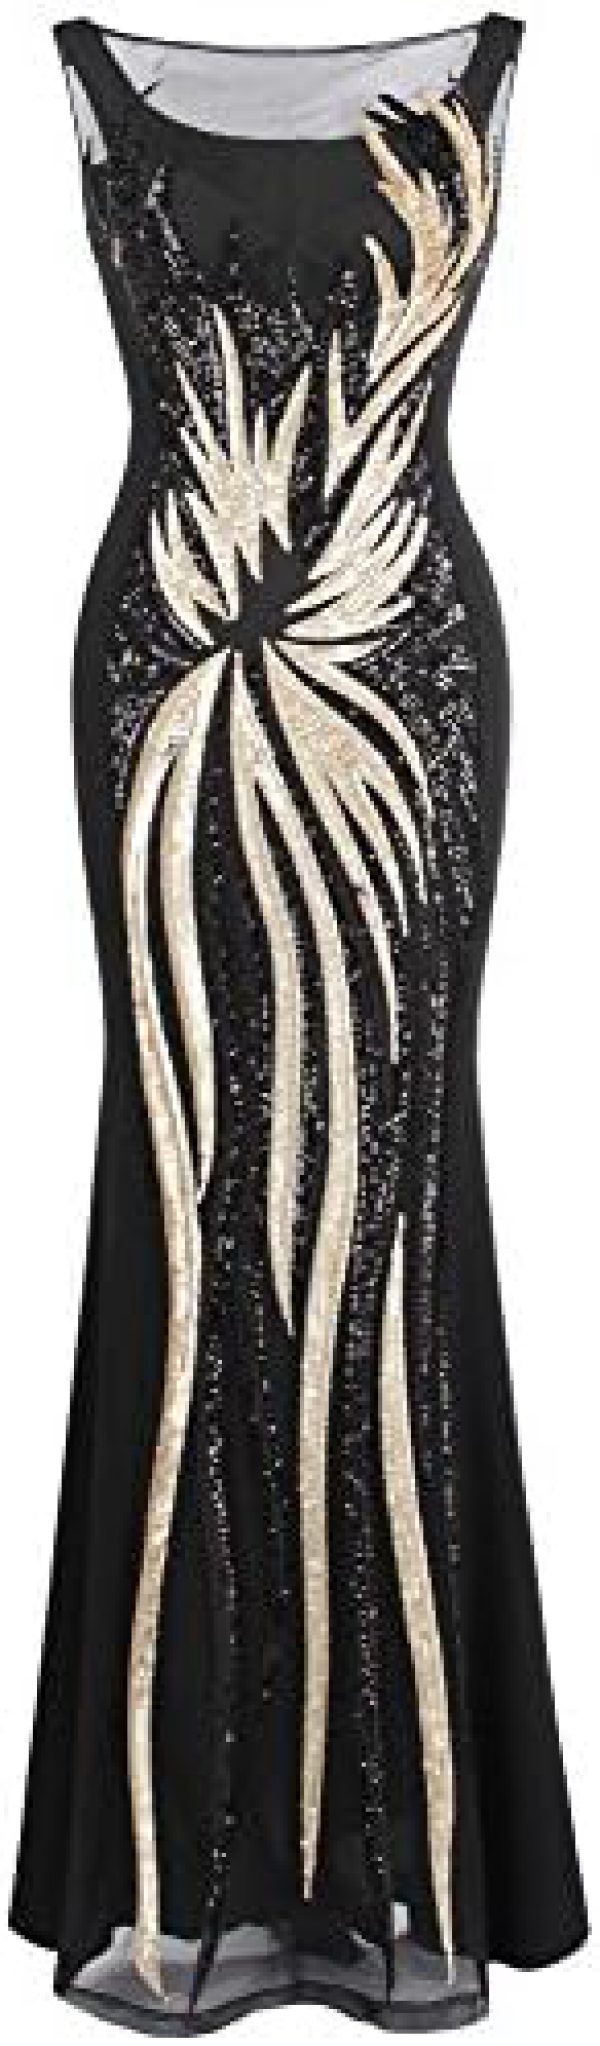 Dazzling Black Sequin Evening Dress: Unleash Elegance and Glamour!